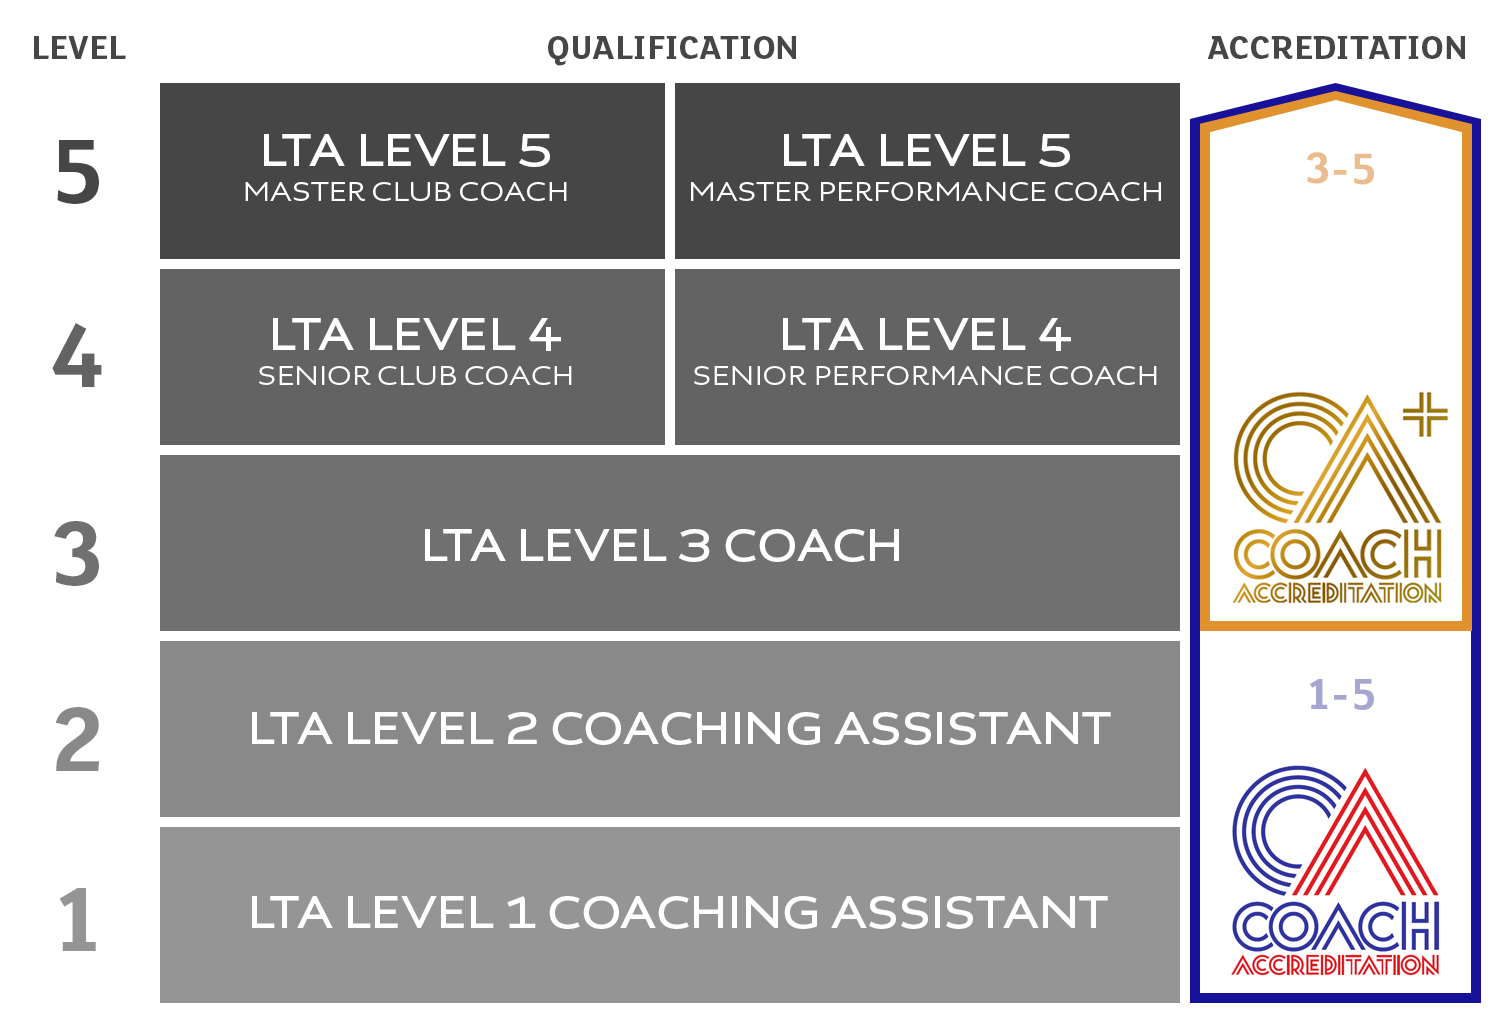 Understanding Qualification vs Accreditation